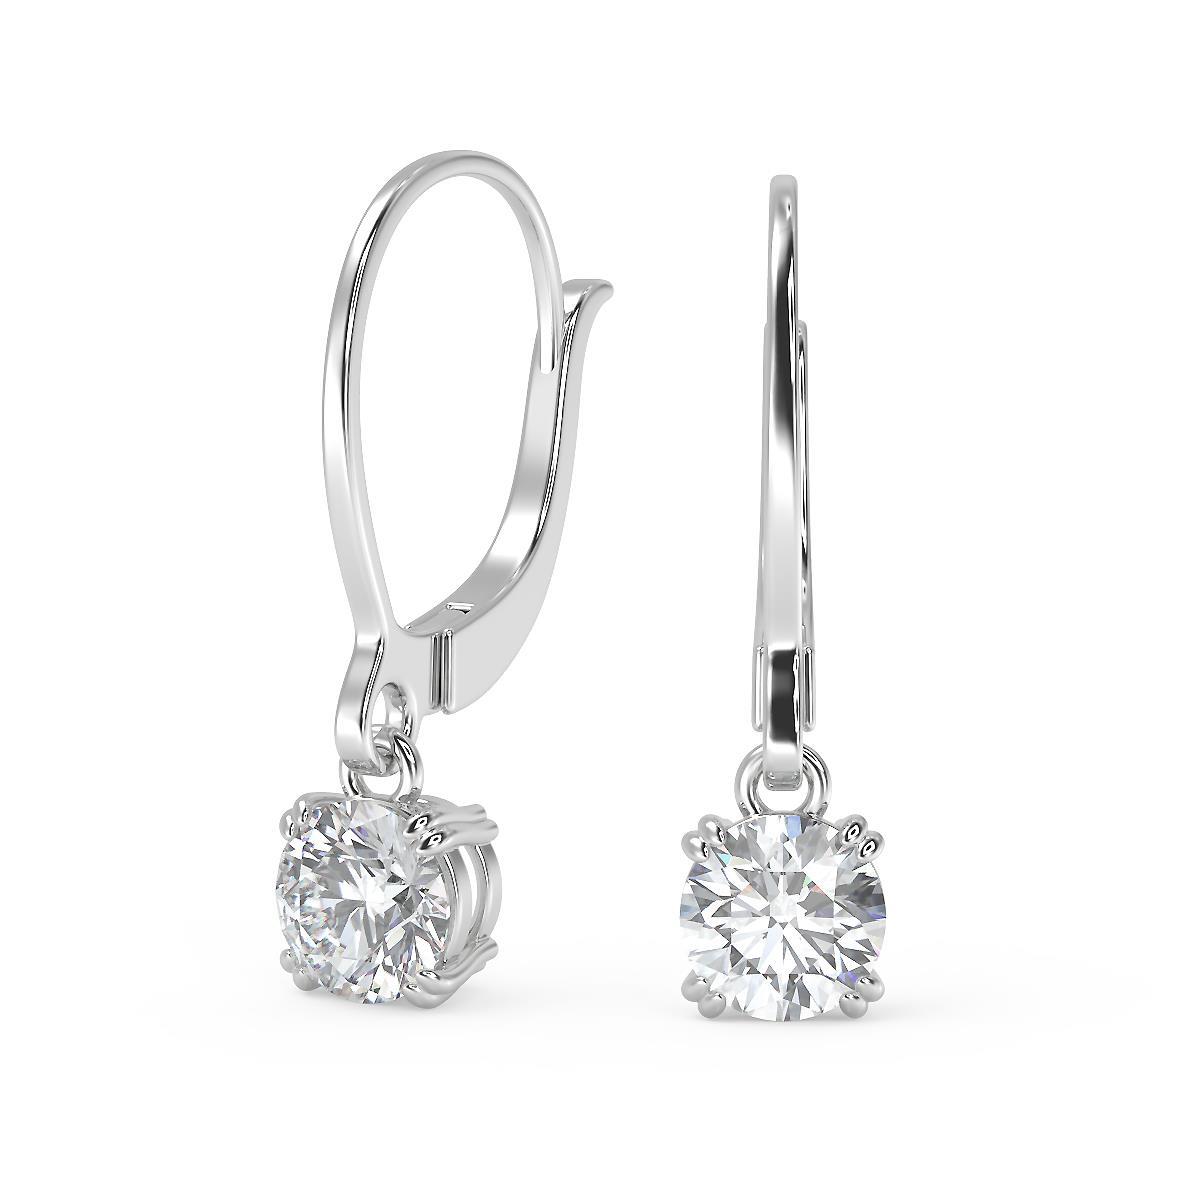 1 3 Ct Round Cut Double Prong Diamond Earrings Vvs1 D Leverback White Gold 18k Ebay